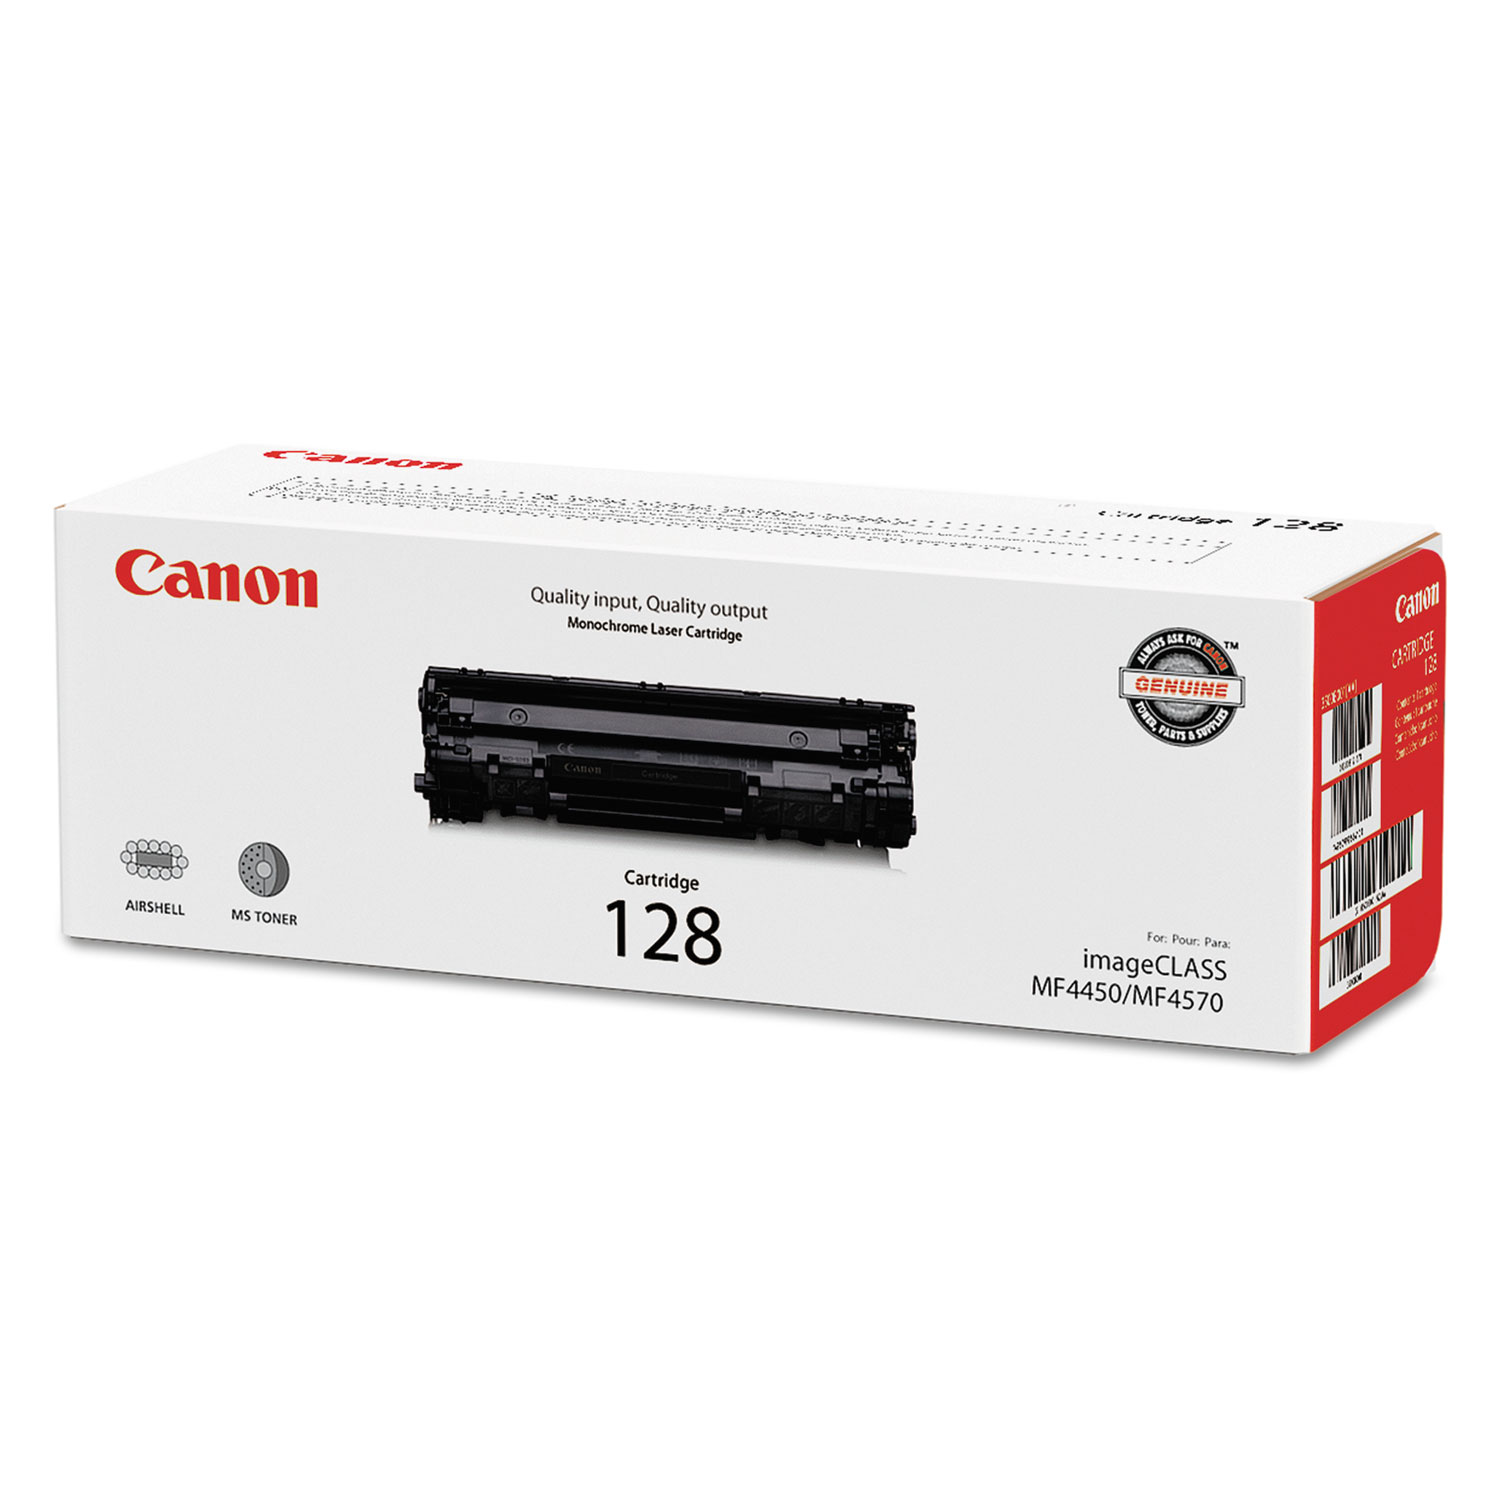  Canon 3500B001 3500B001 (128) Toner, 2100 Page-Yield, Black (CNM3500B001) 